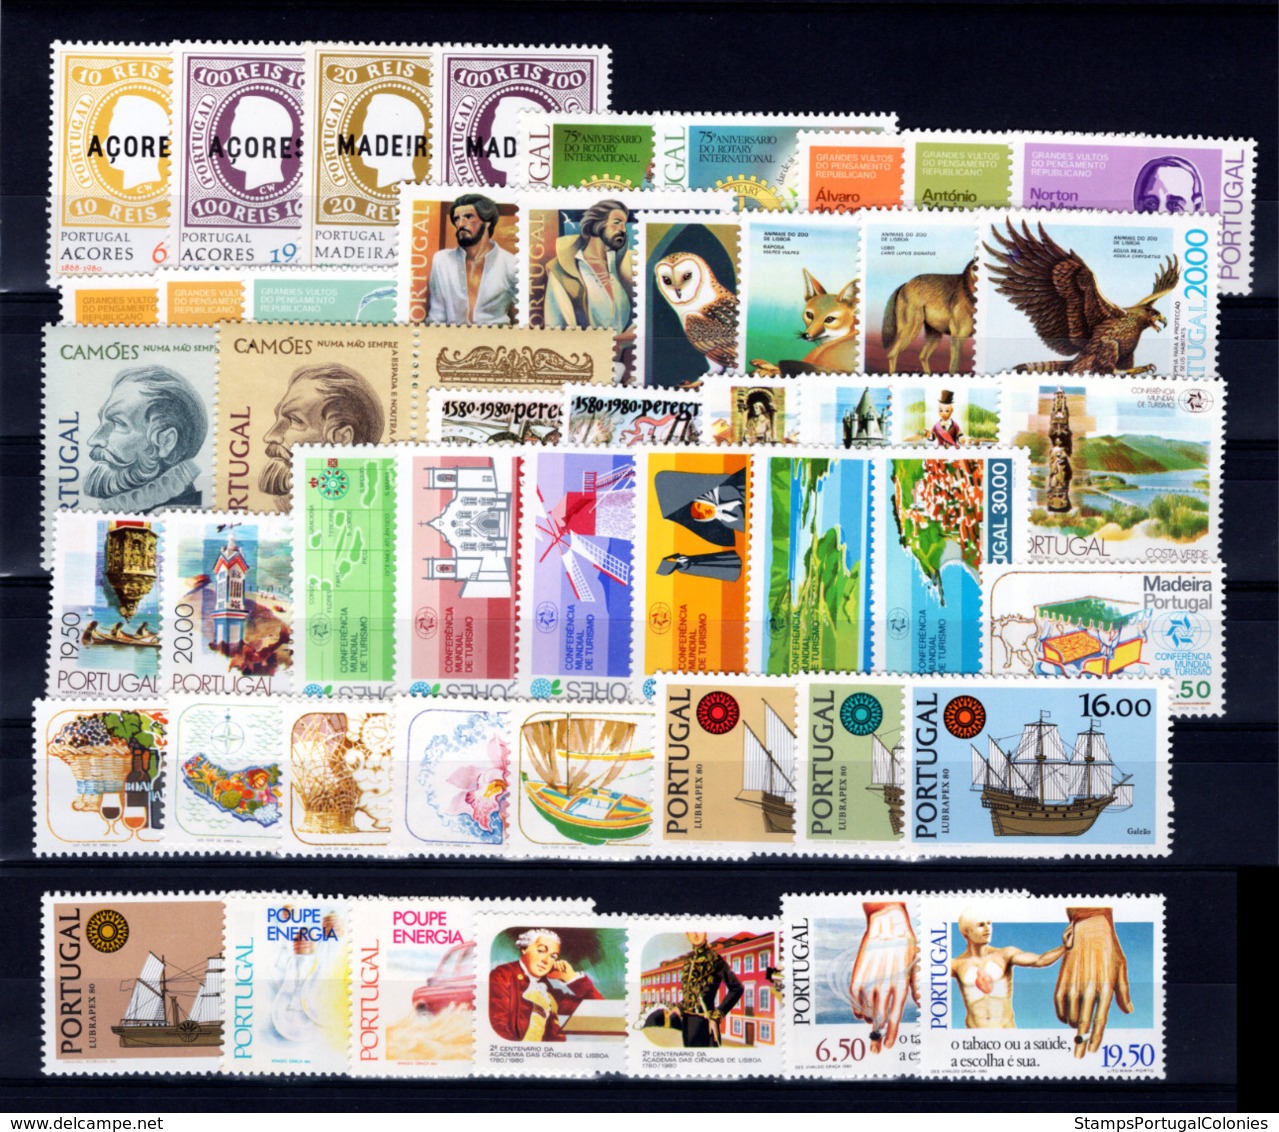 1980 Portugal Azores Madeira Complete Year MNH Stamps. Année Compléte NeufSansCharnière. Ano Completo Novo Sem Charneira - Années Complètes